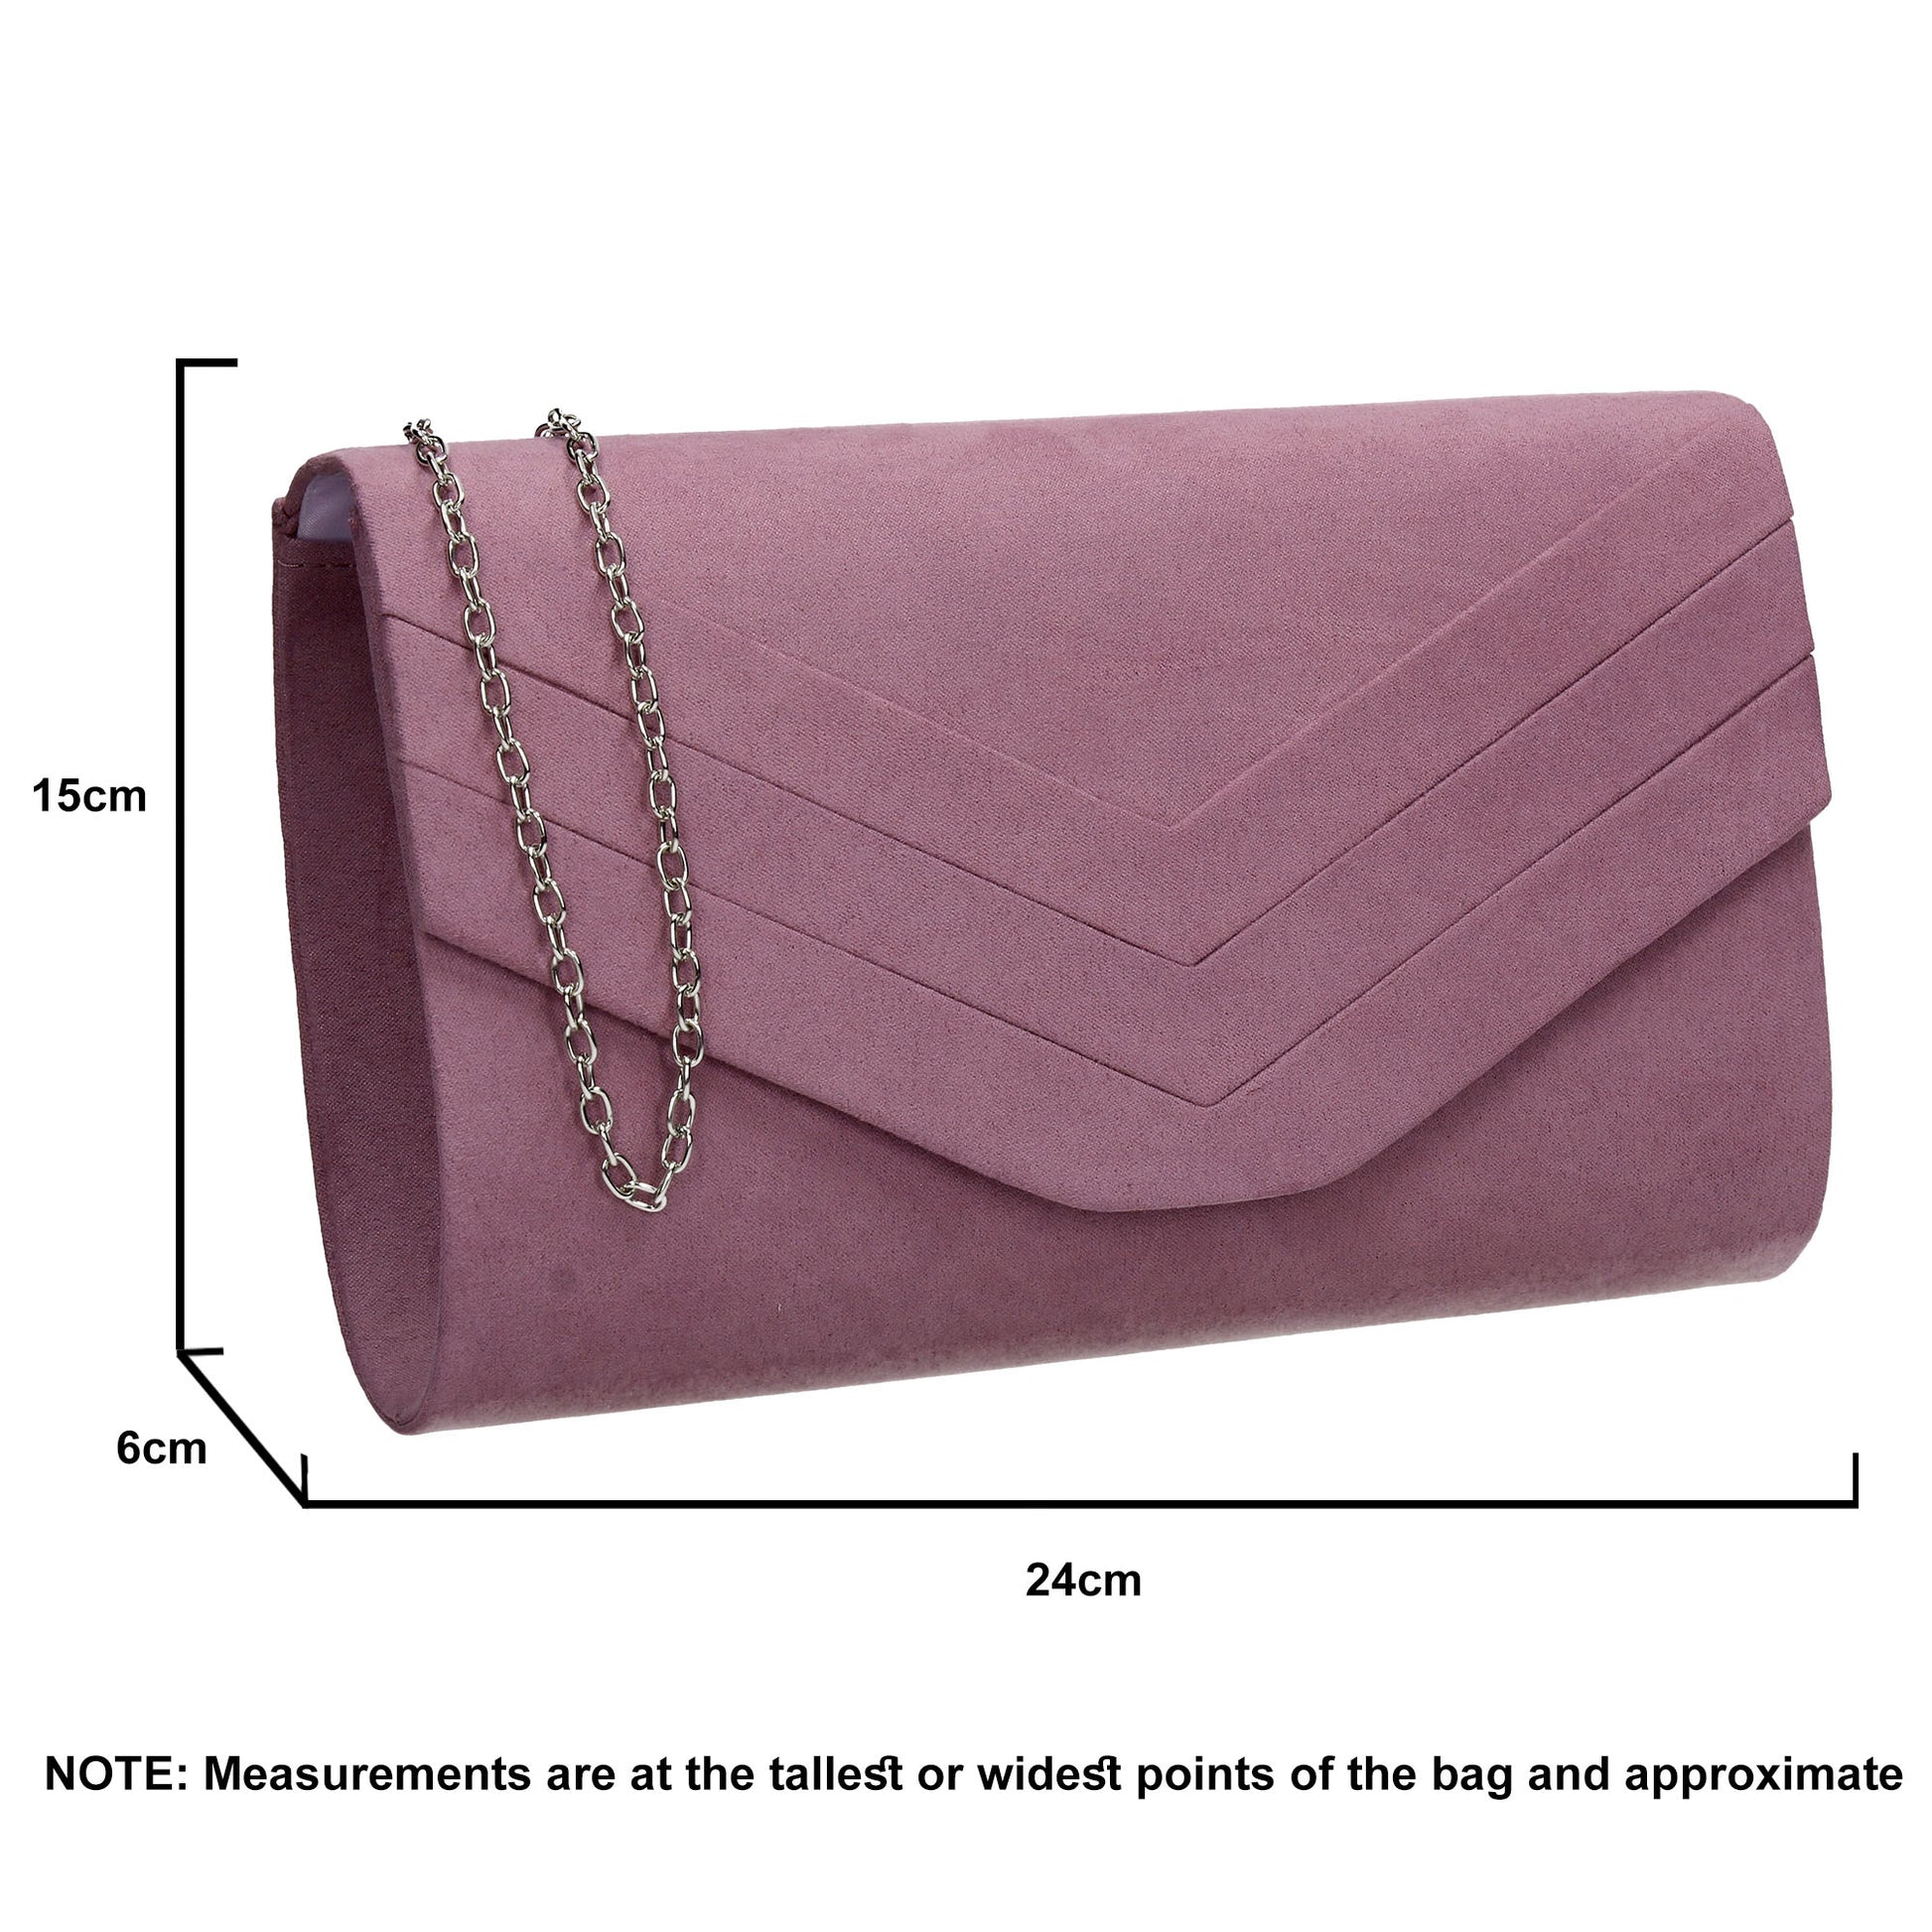 SWANKYSWANS Samantha V Detail Clutch Bag Light Purple Cute Cheap Clutch Bag For Weddings School and Work